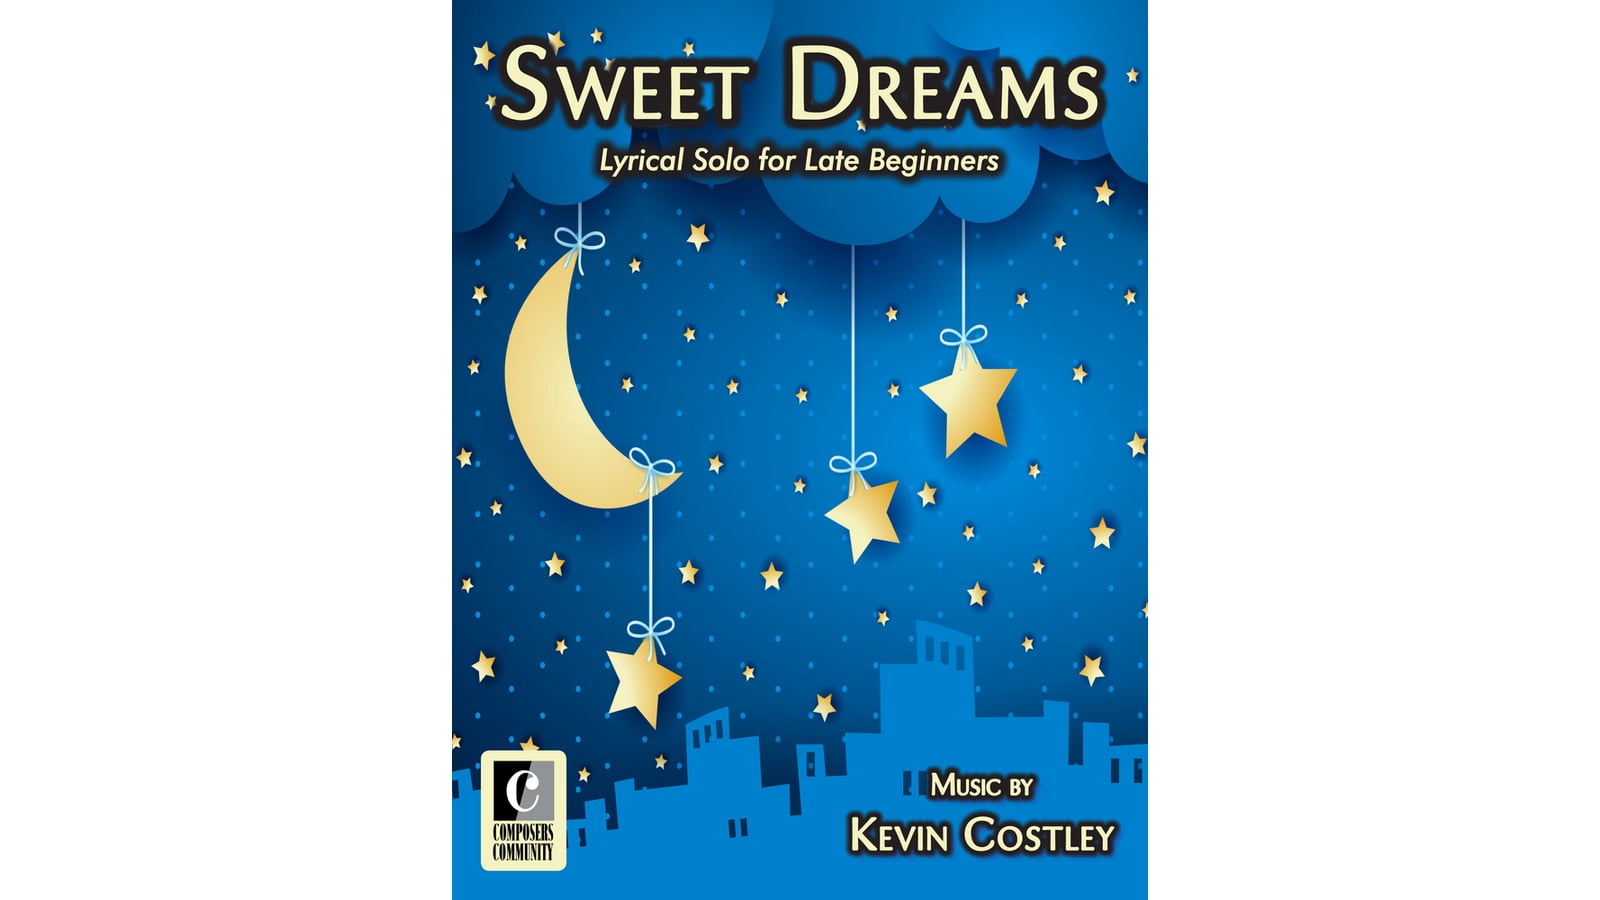 Goodnight, Sweet Dreams  Piano Pronto Publishing